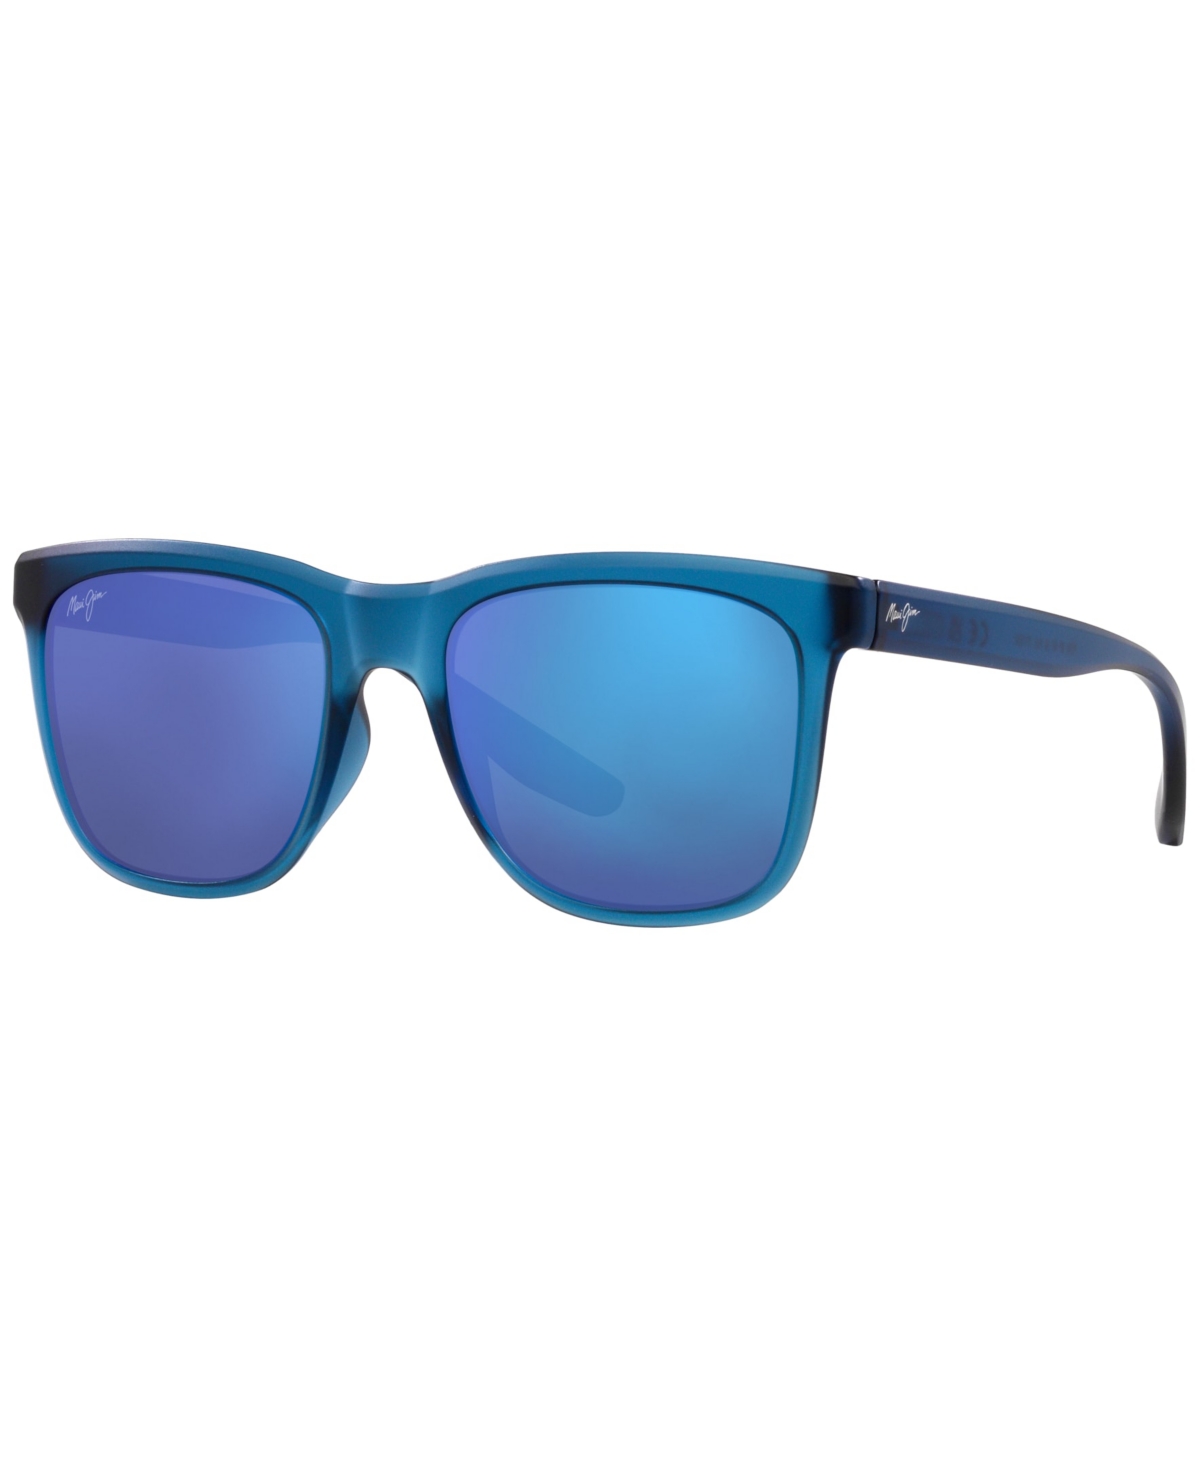 Maui Jim Unisex Polarized Sunglasses, Mj00069155-z 55 In Blue Matte